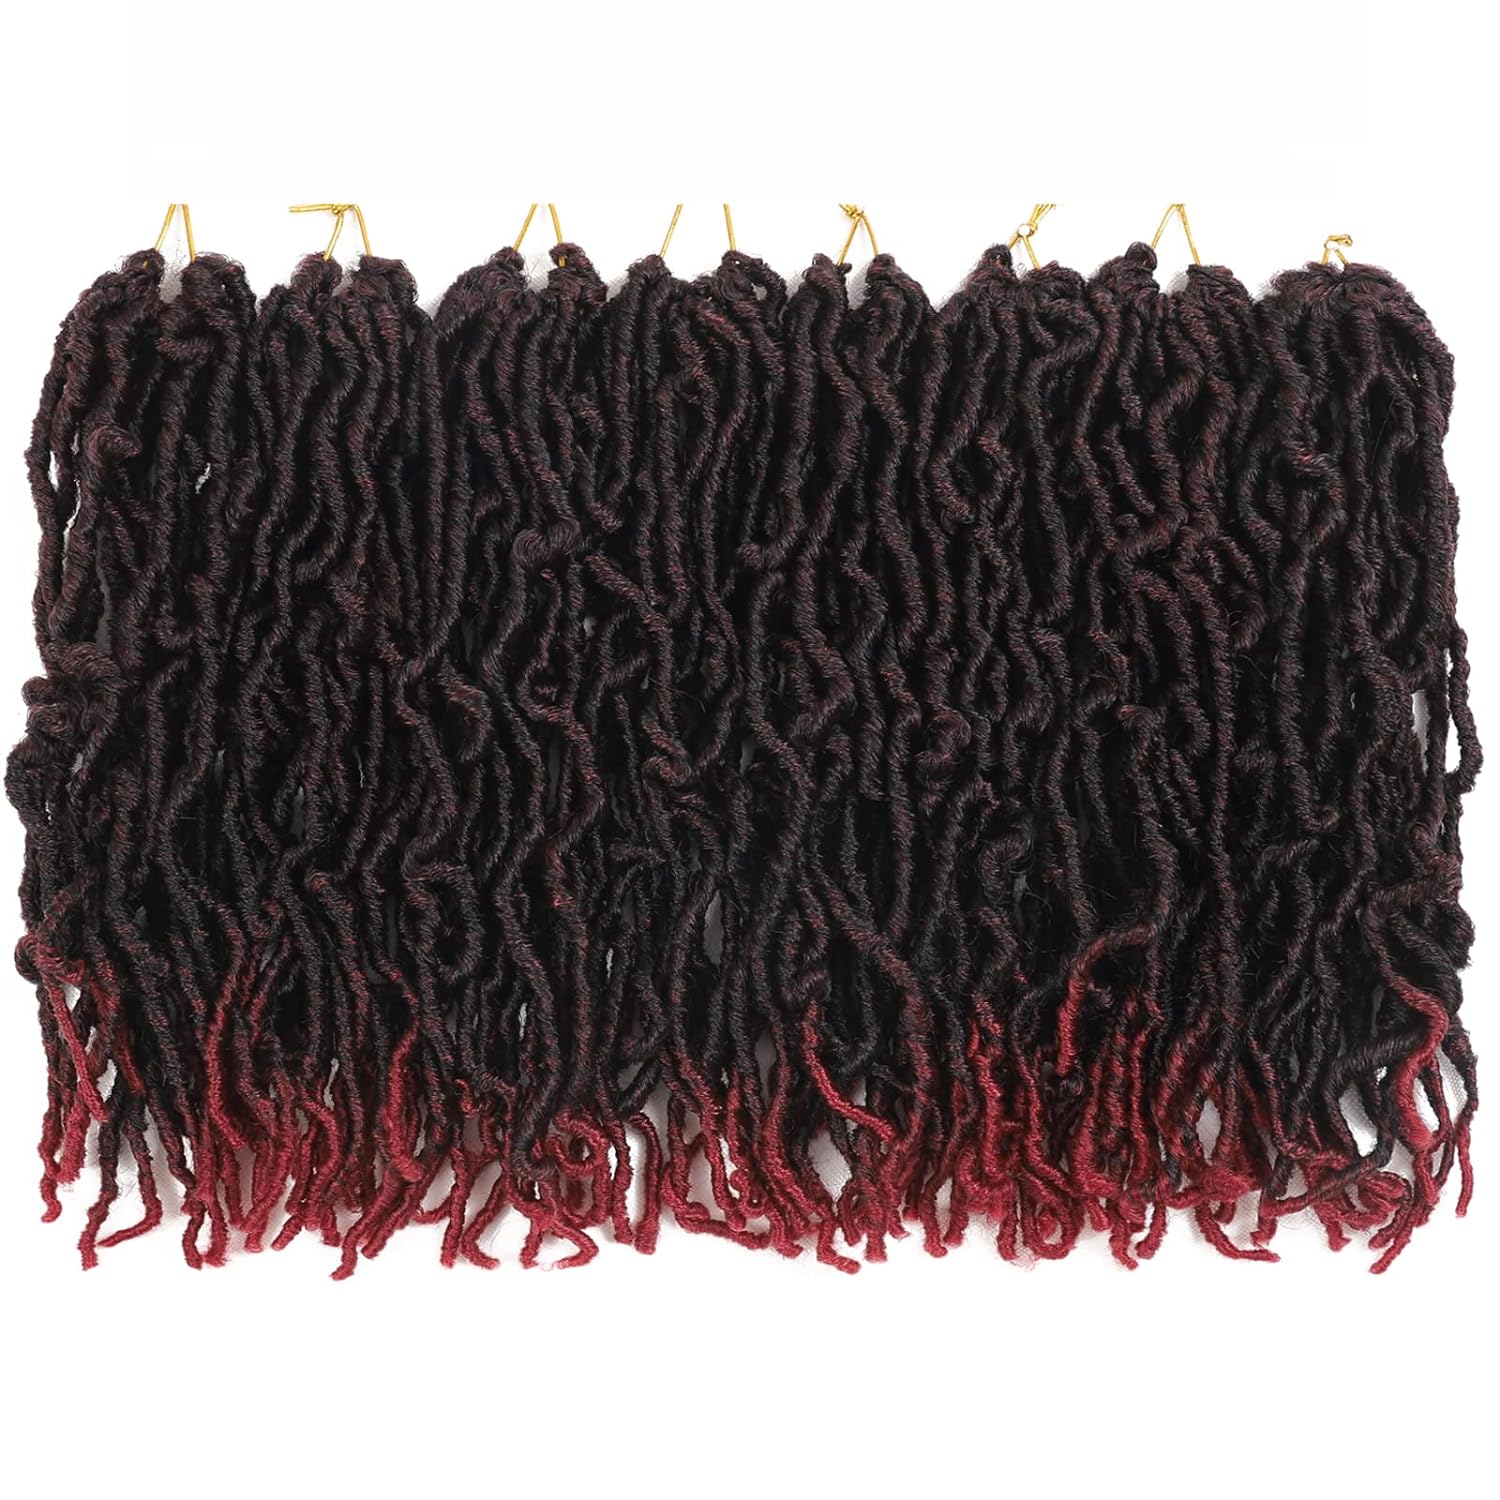 8 Packs Short Faux Locs Crochet Hair 120 Strands 12Inch Soft Locs Wavy Dreadlocks Crochet Braids Natural Pre-Looped Crochet Hair for Black Women (12 Inch (Pack of 8), 1B)